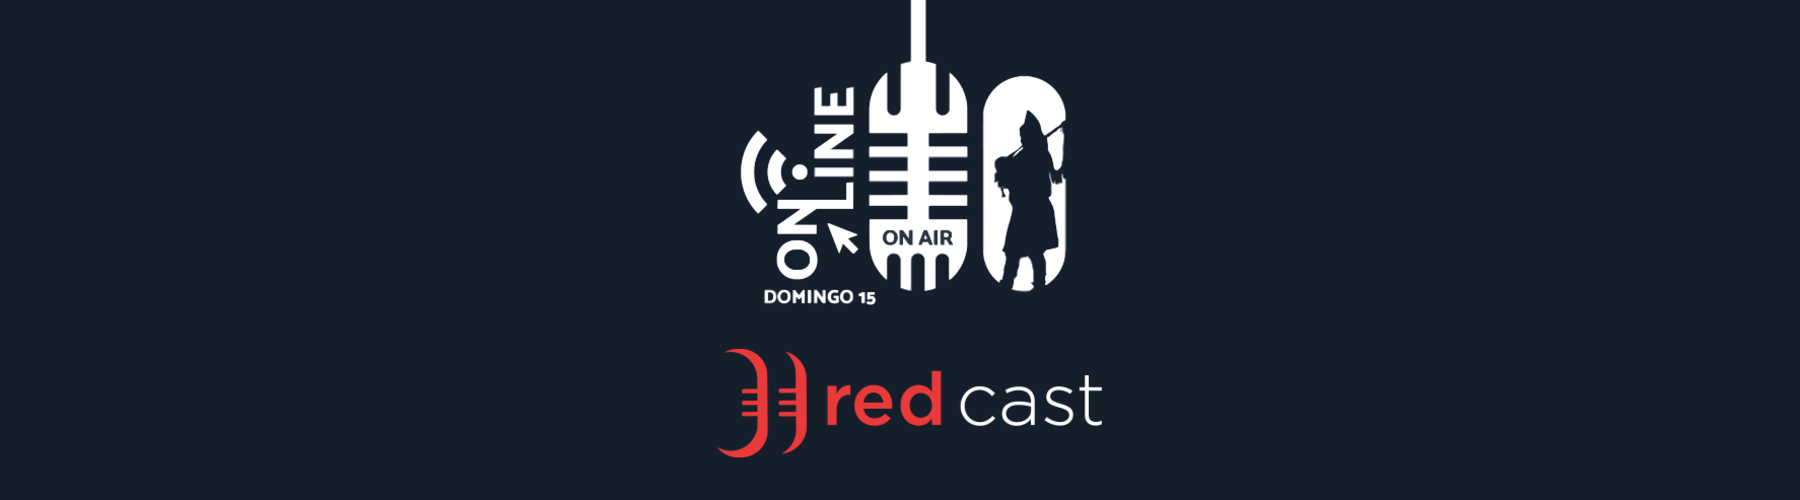 Podimo - Redcast y JPOD